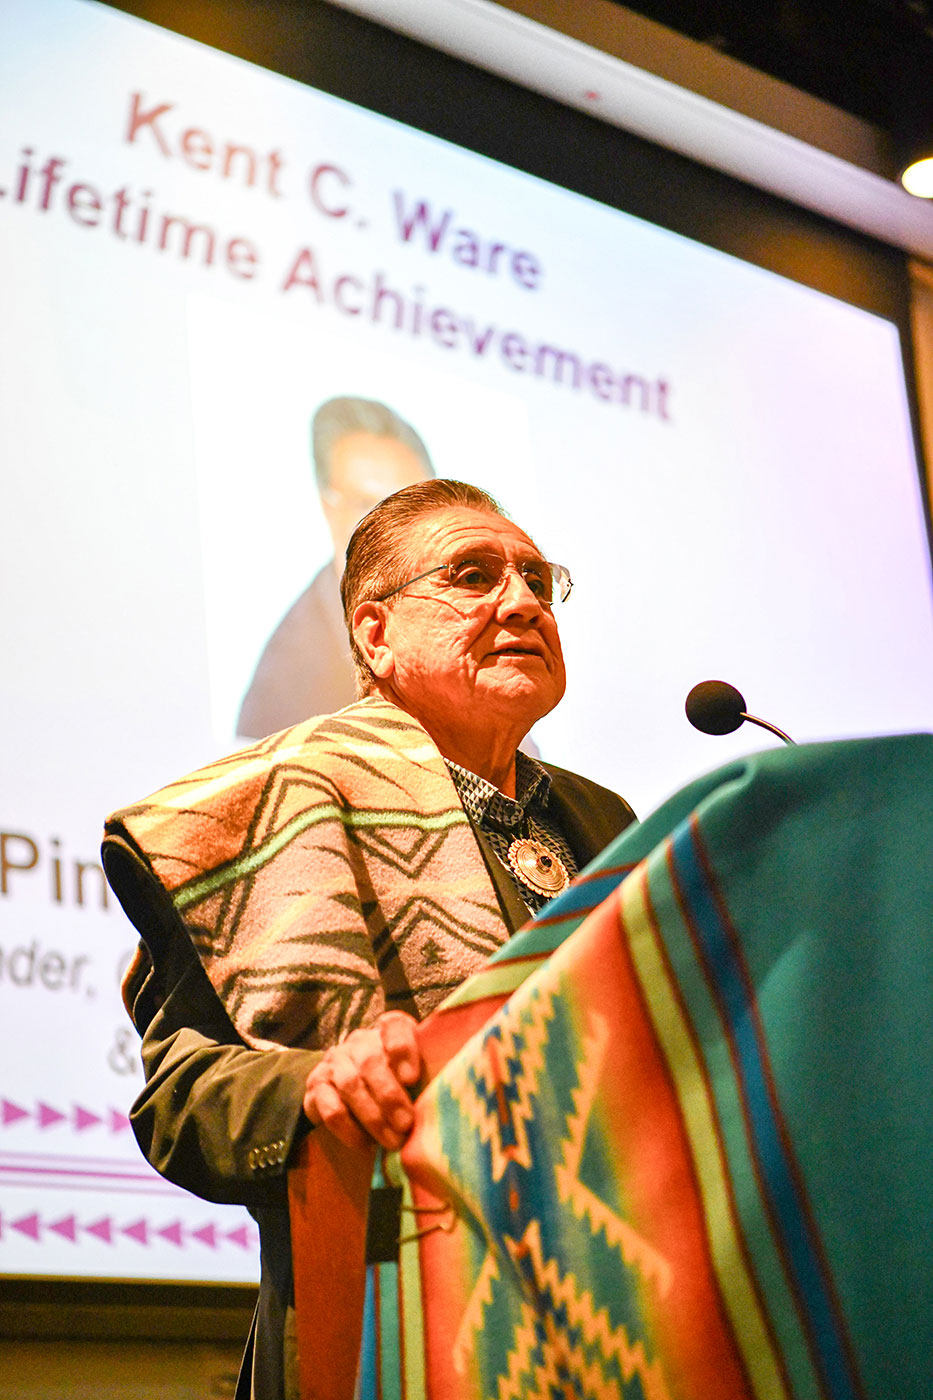 President Makil Receives Phoenix Indian Center Lifetime Achievement Award